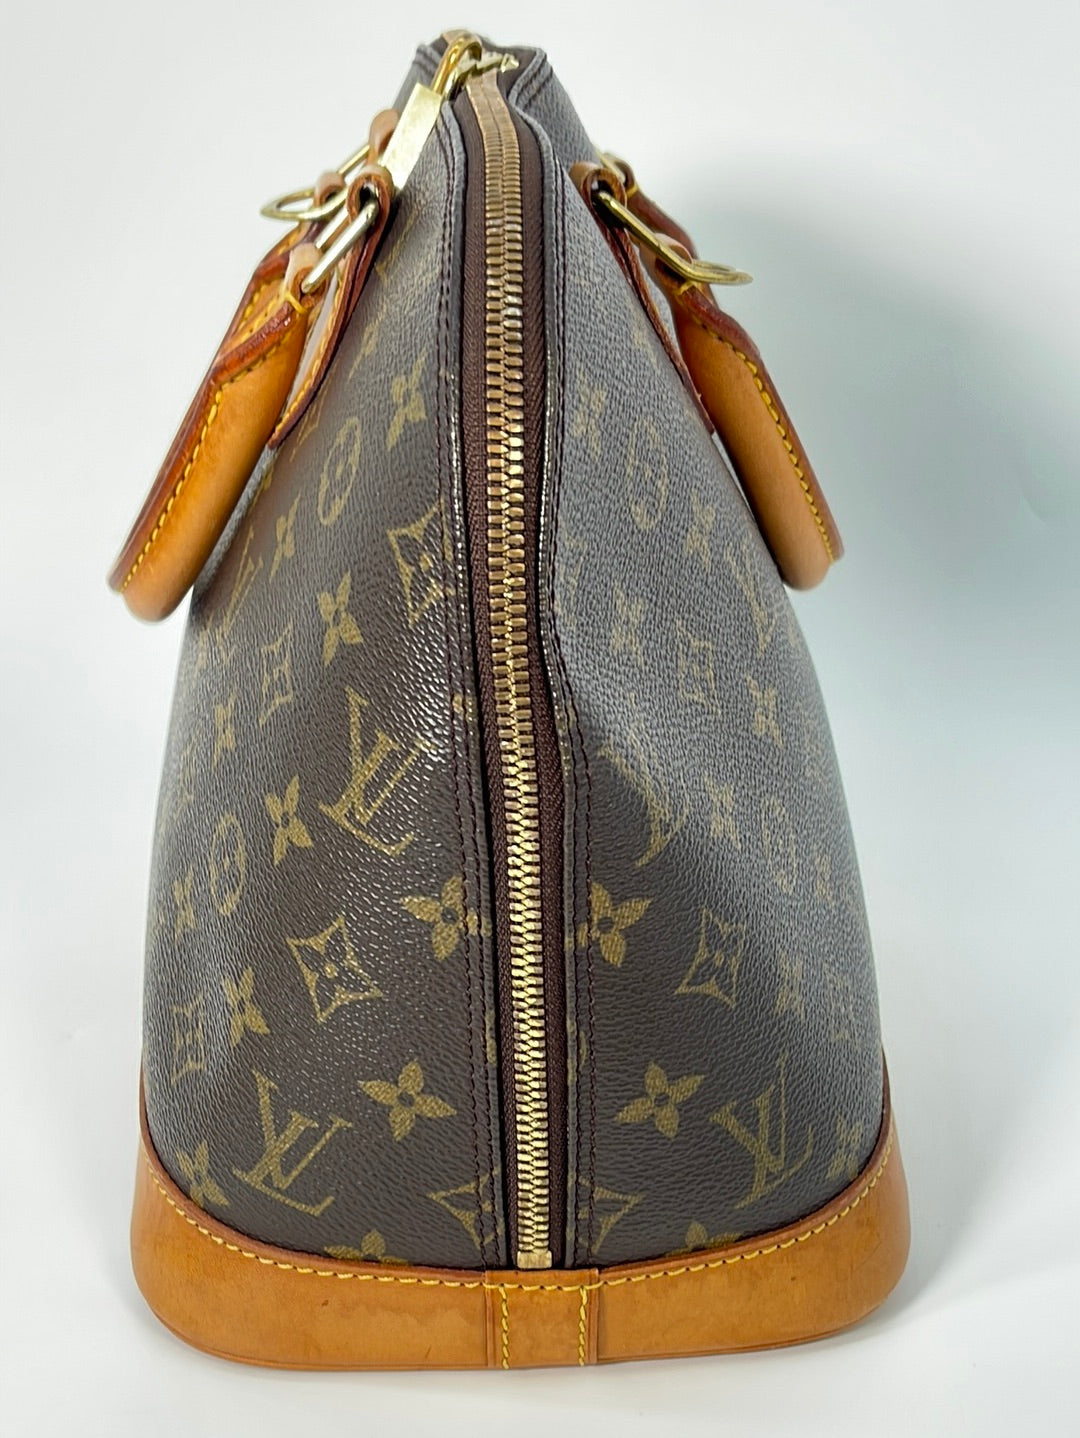 Louise Vuitton Vintage Alma PM Bag